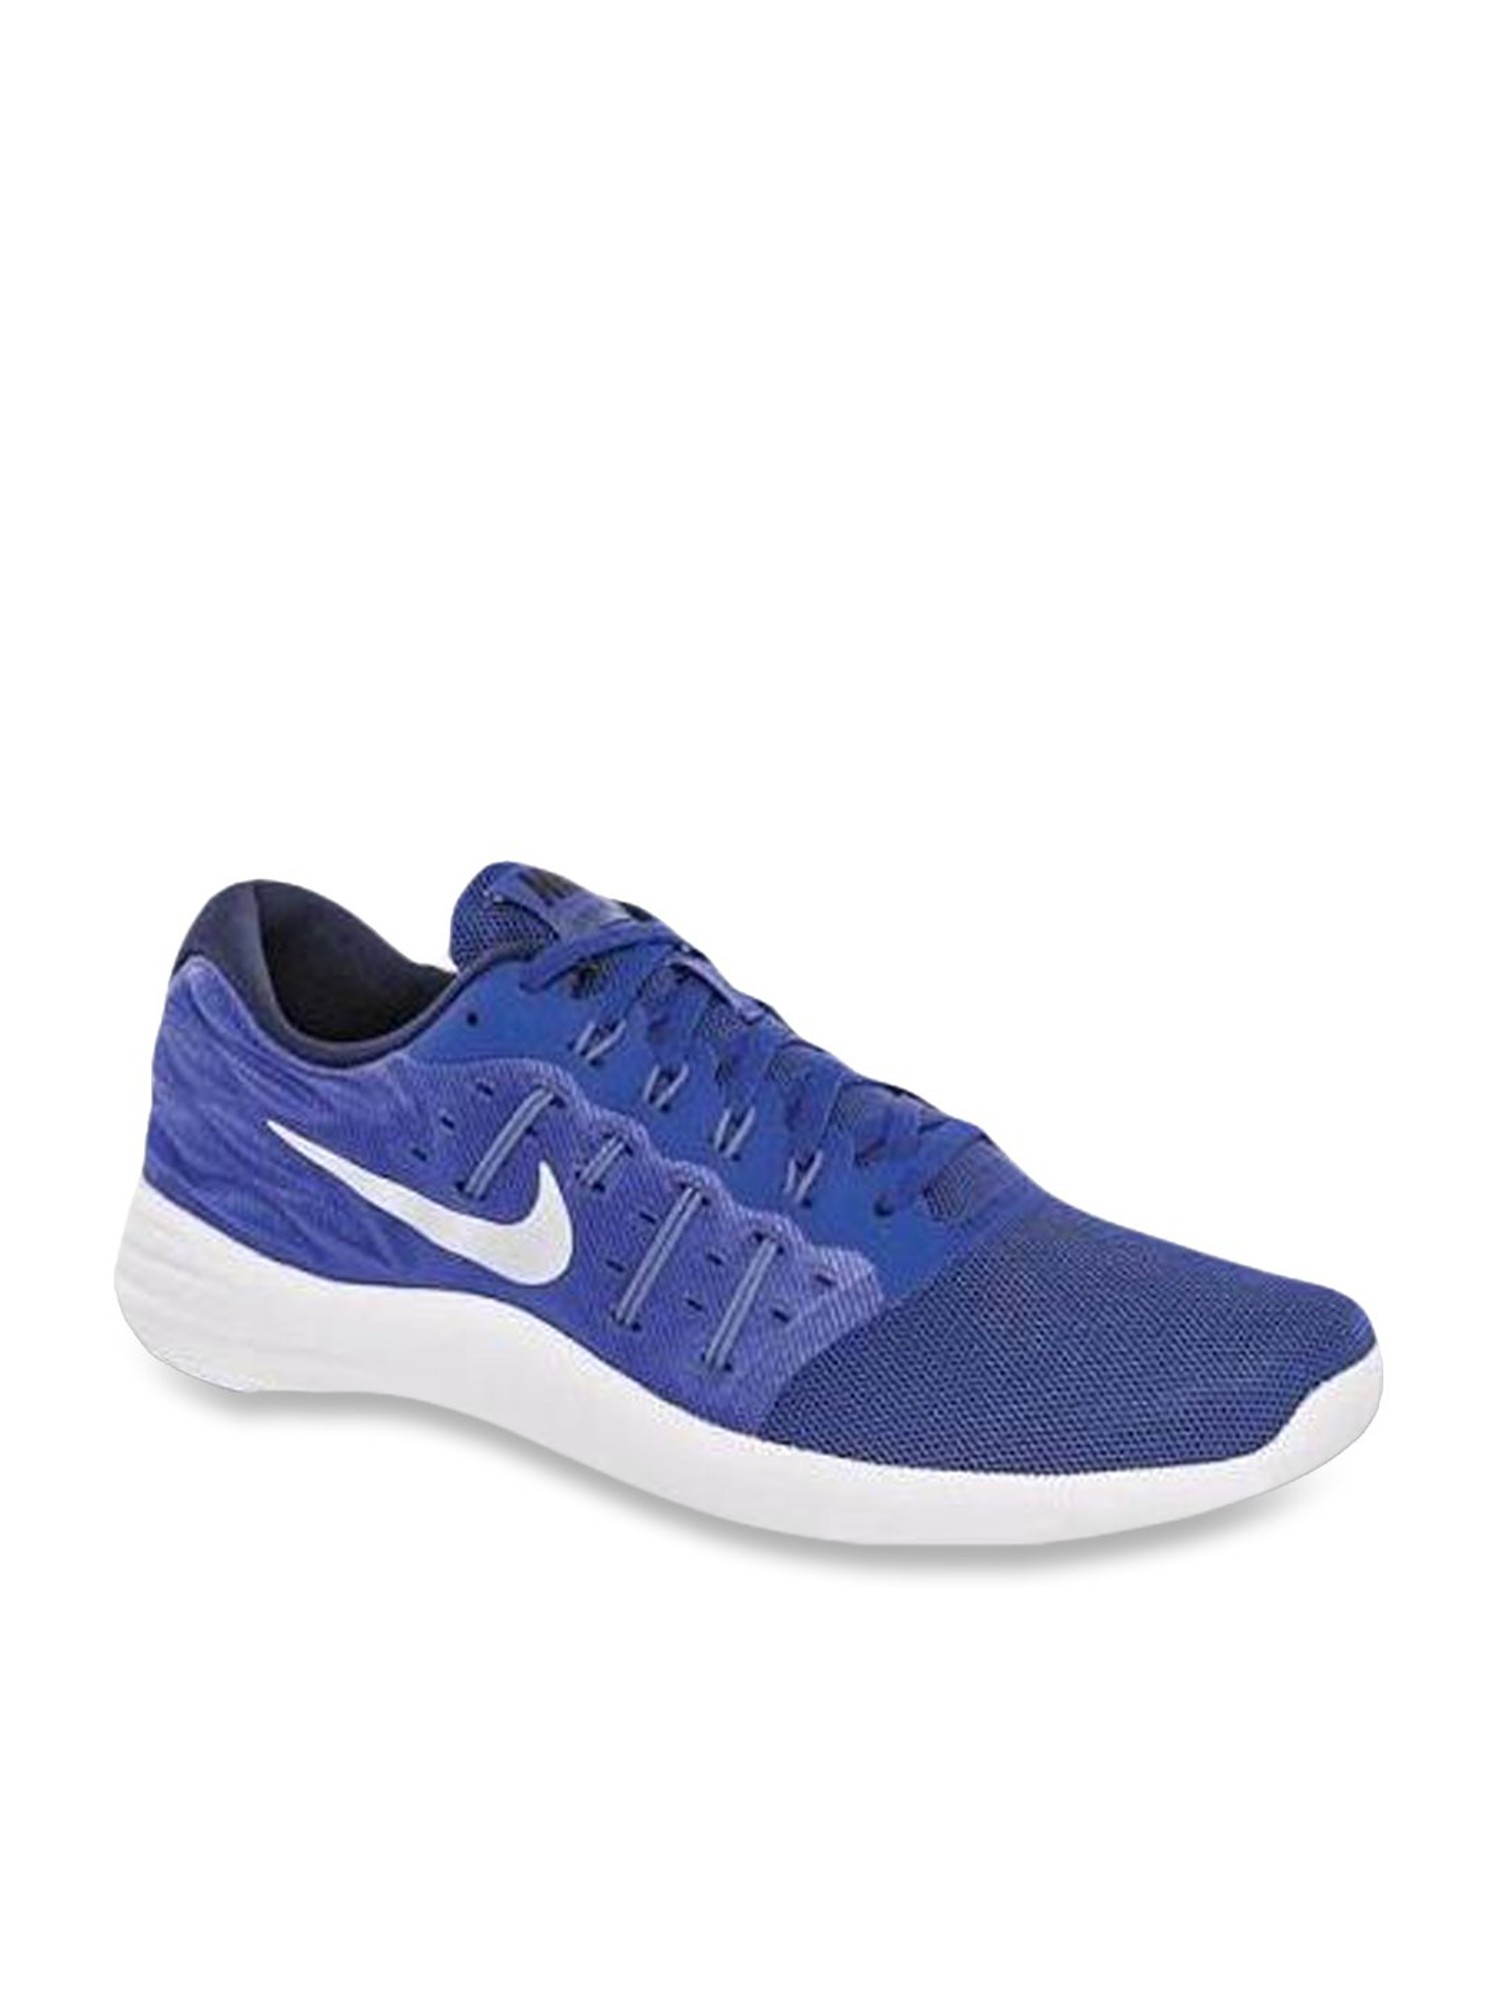 nike lunarstelos blue running shoes